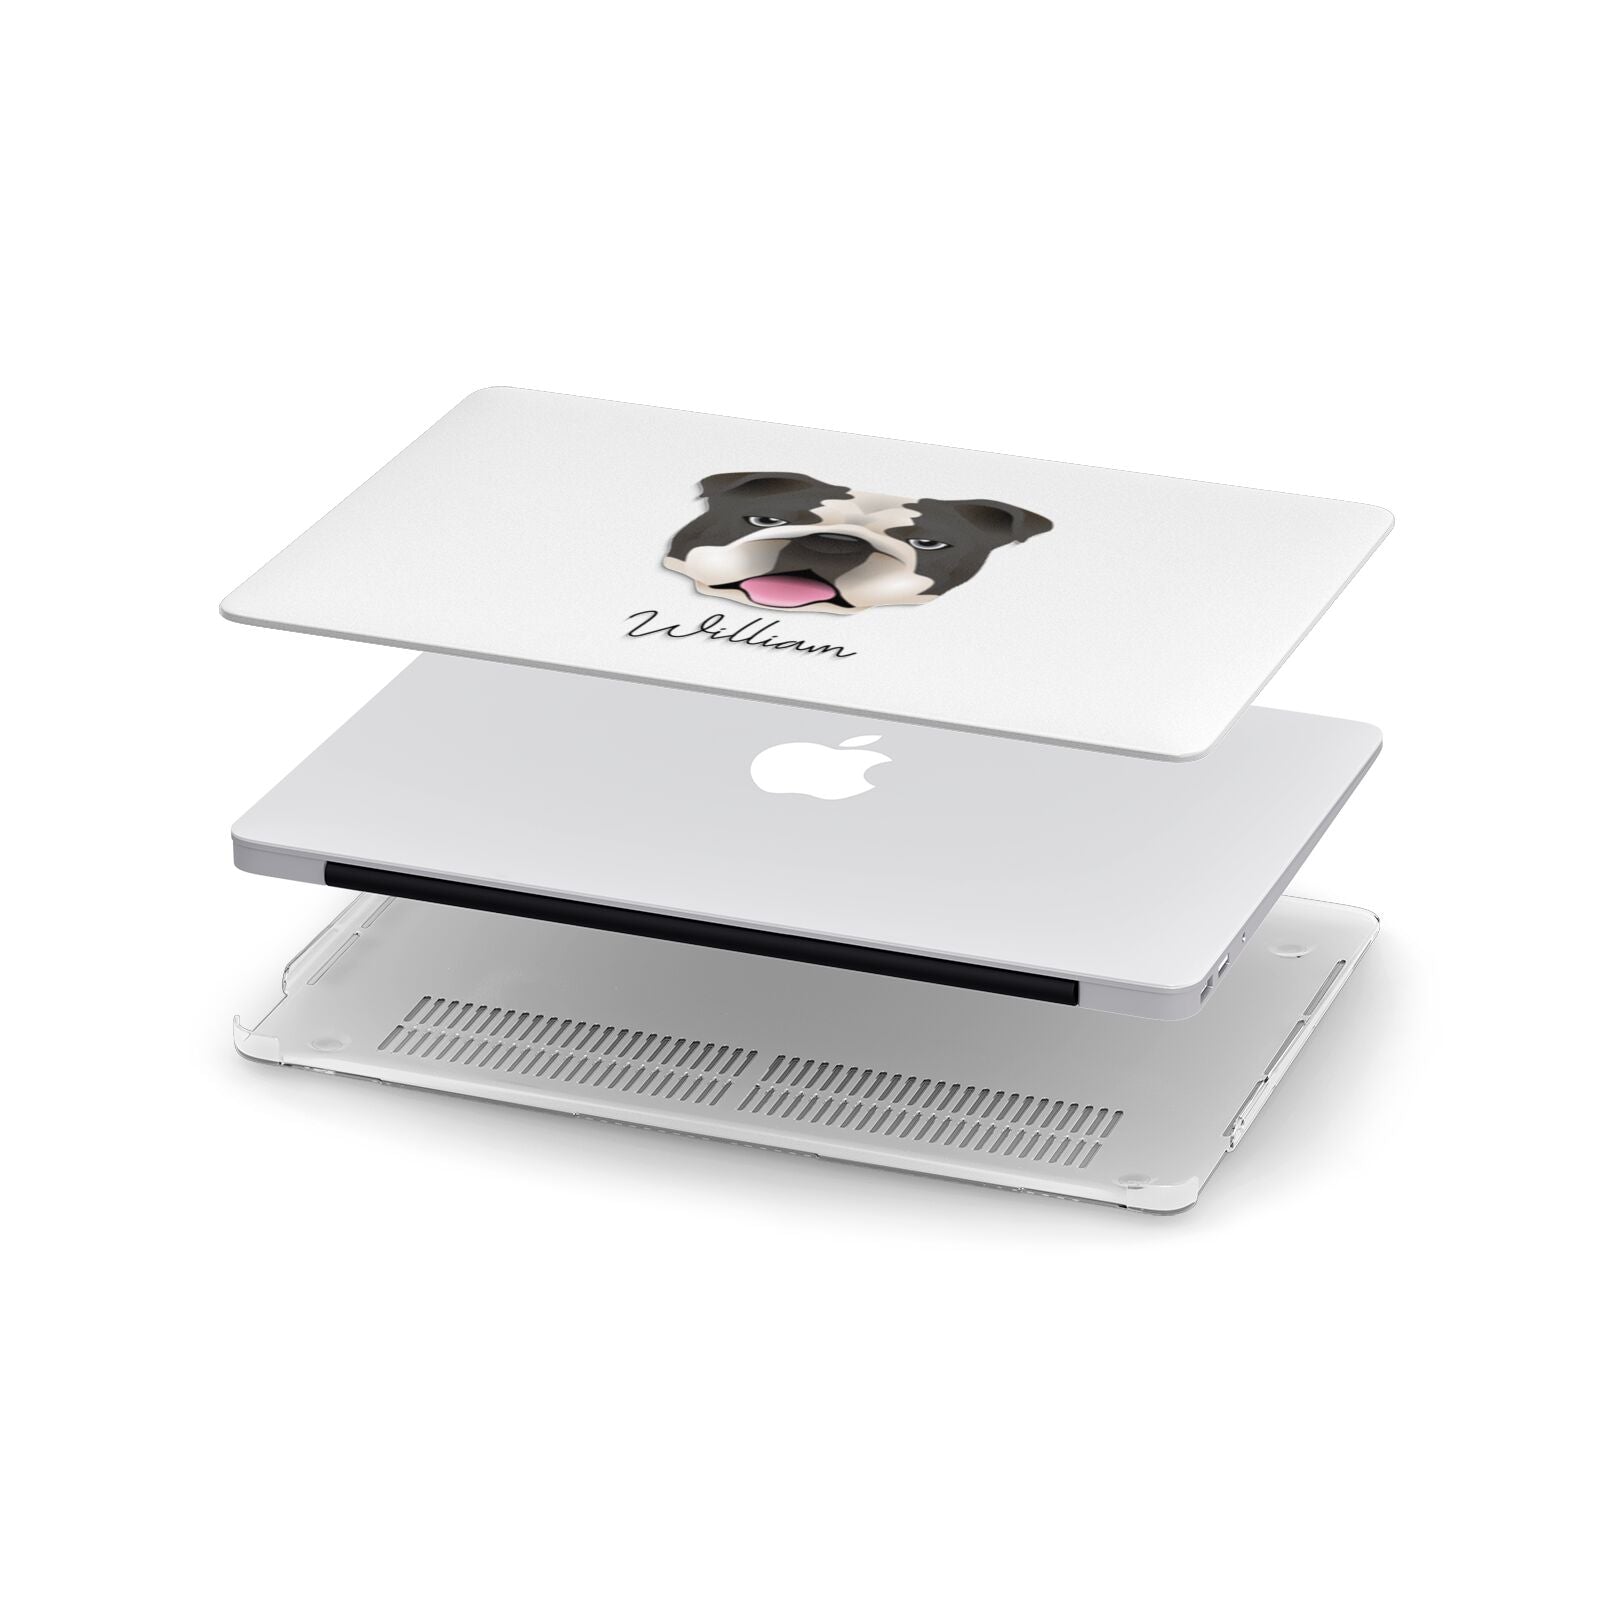 English Bulldog Personalised Apple MacBook Case in Detail